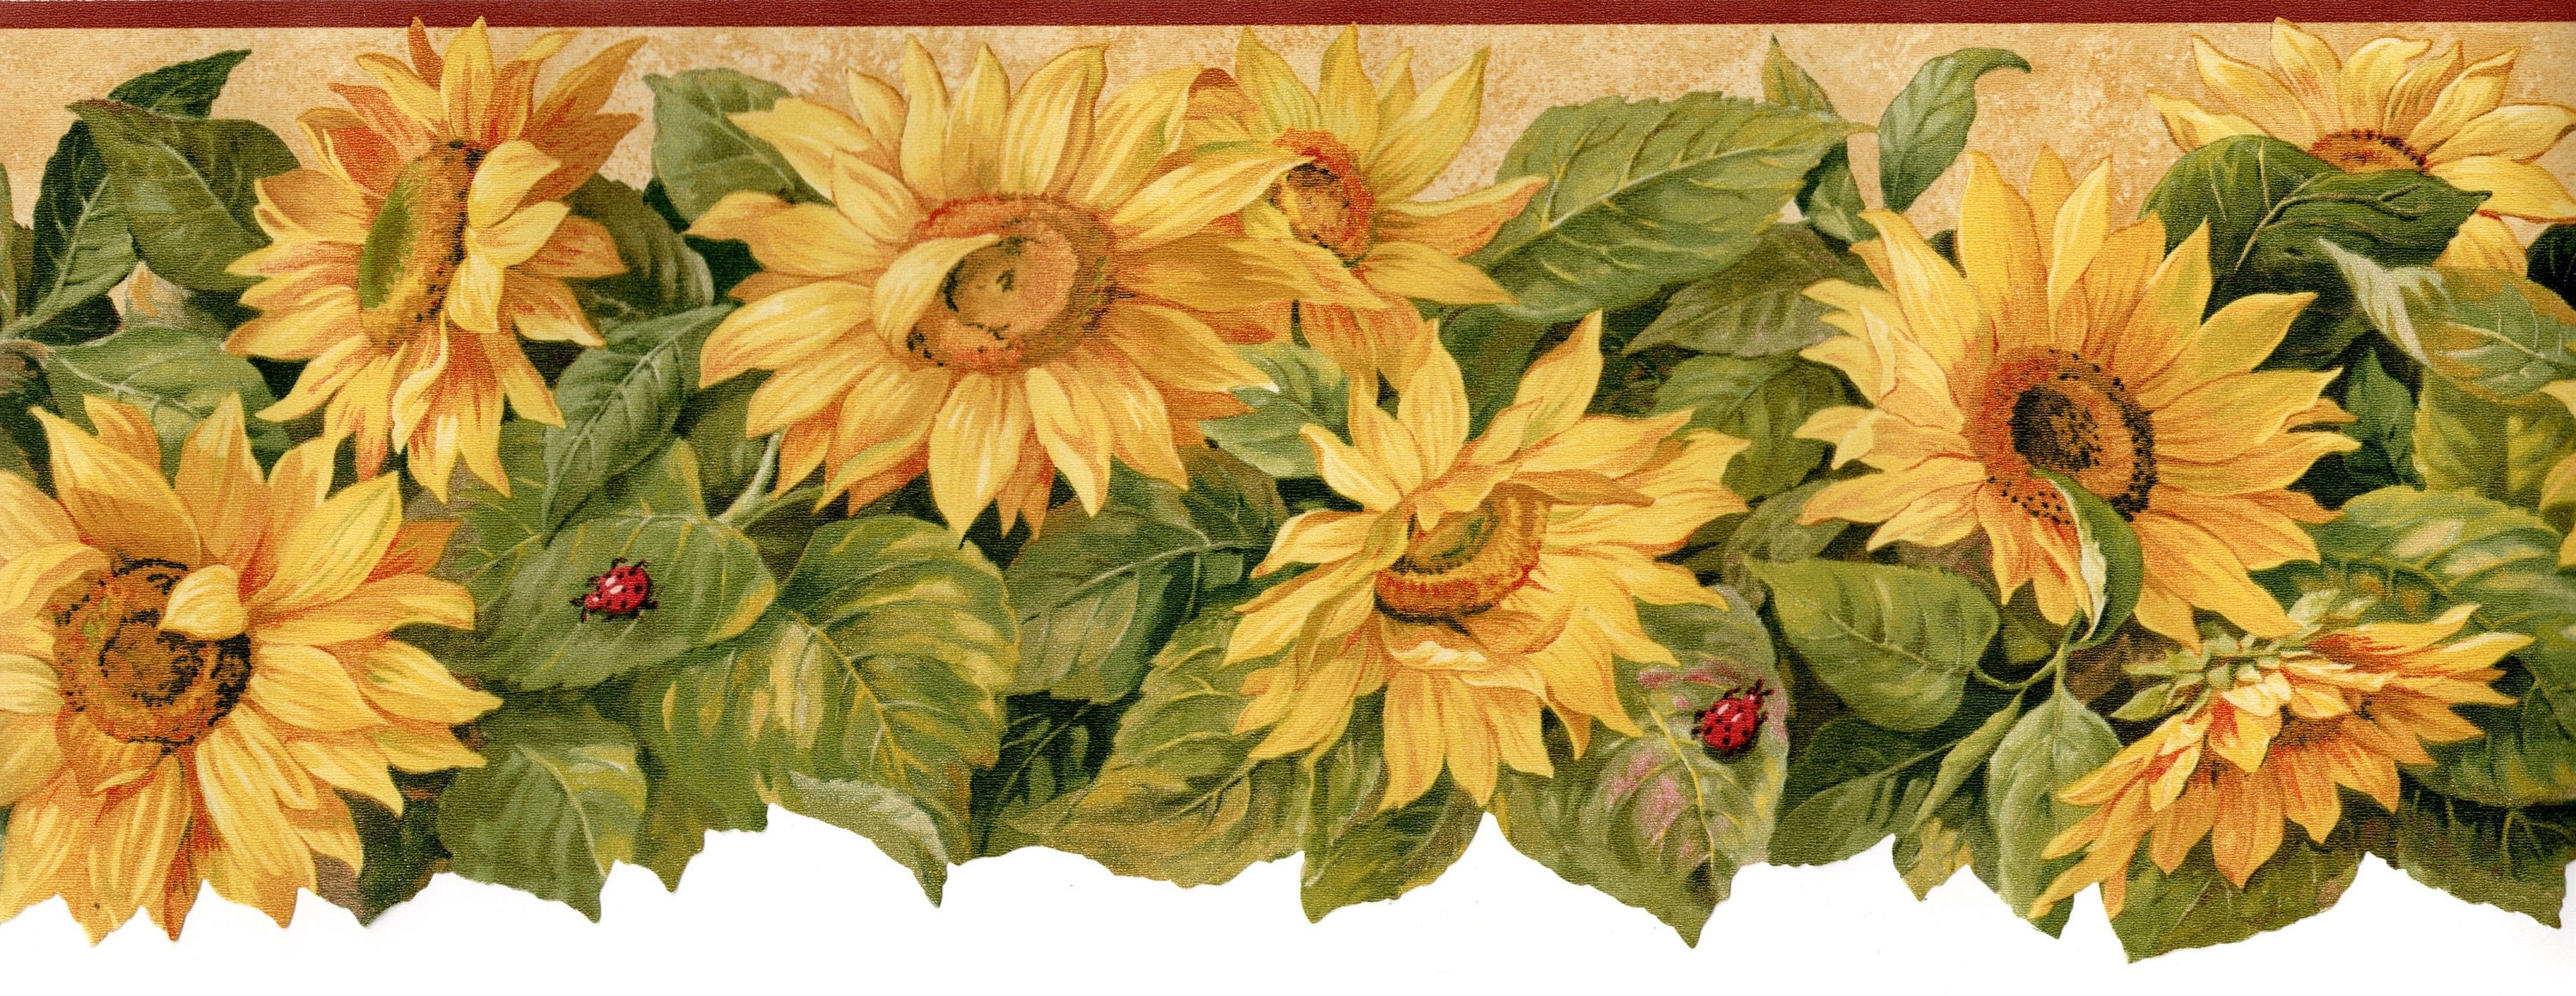 Sunflower Collection Wallpaper Border